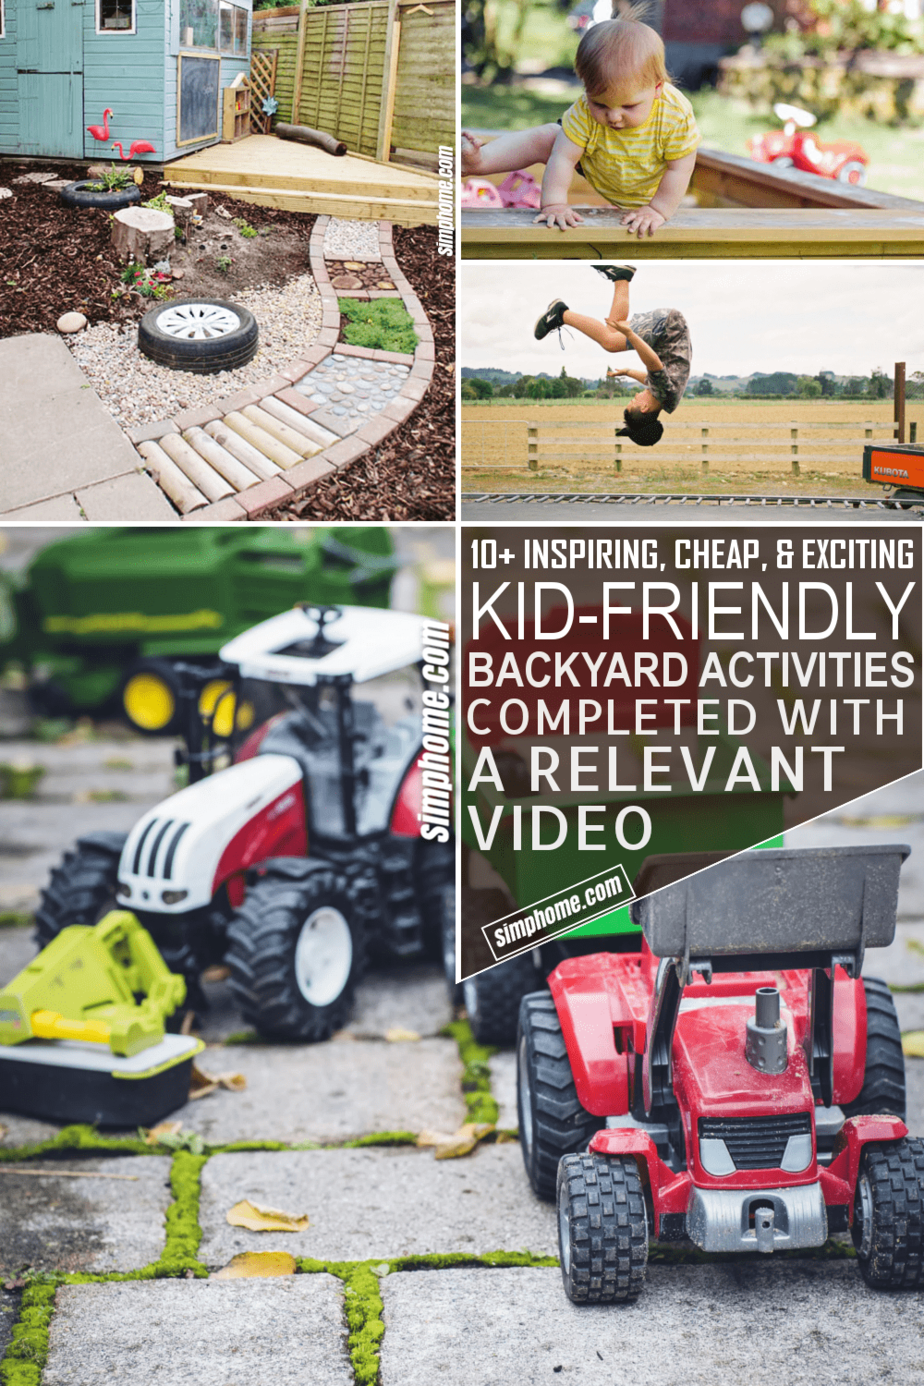 10 Kid Friendly Backyard Ideas On a Budget via Simphome.com Featured Image Pinterest